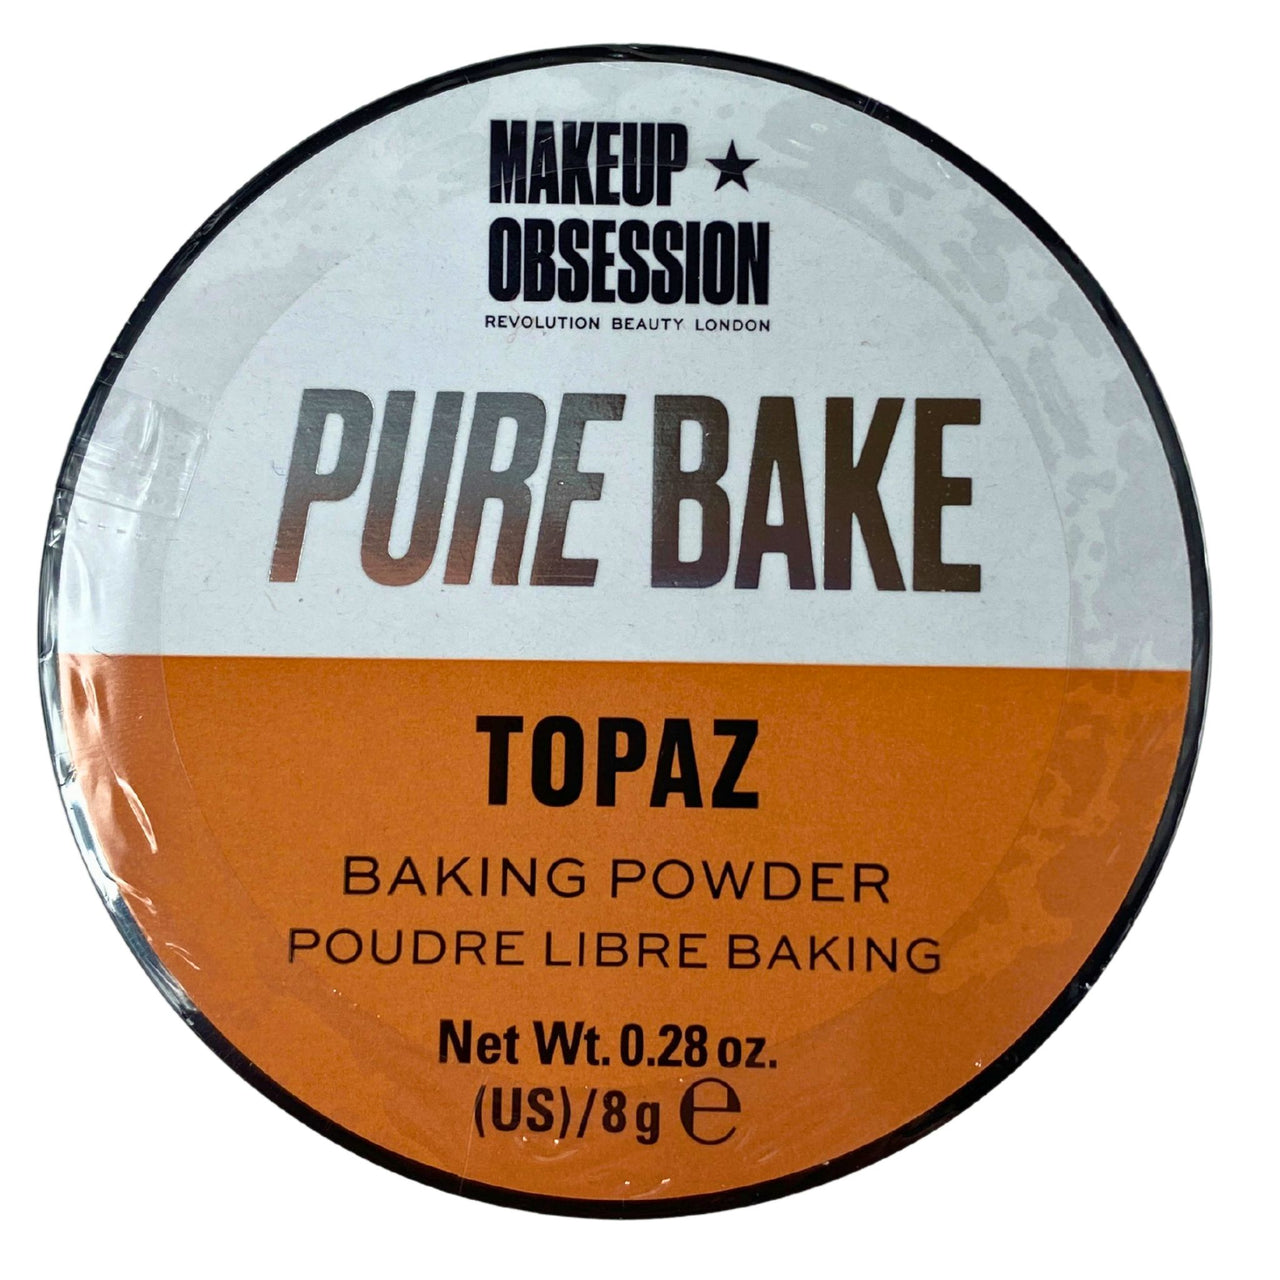 Makeup Obsession Pure Bake Topaz Baking Powder